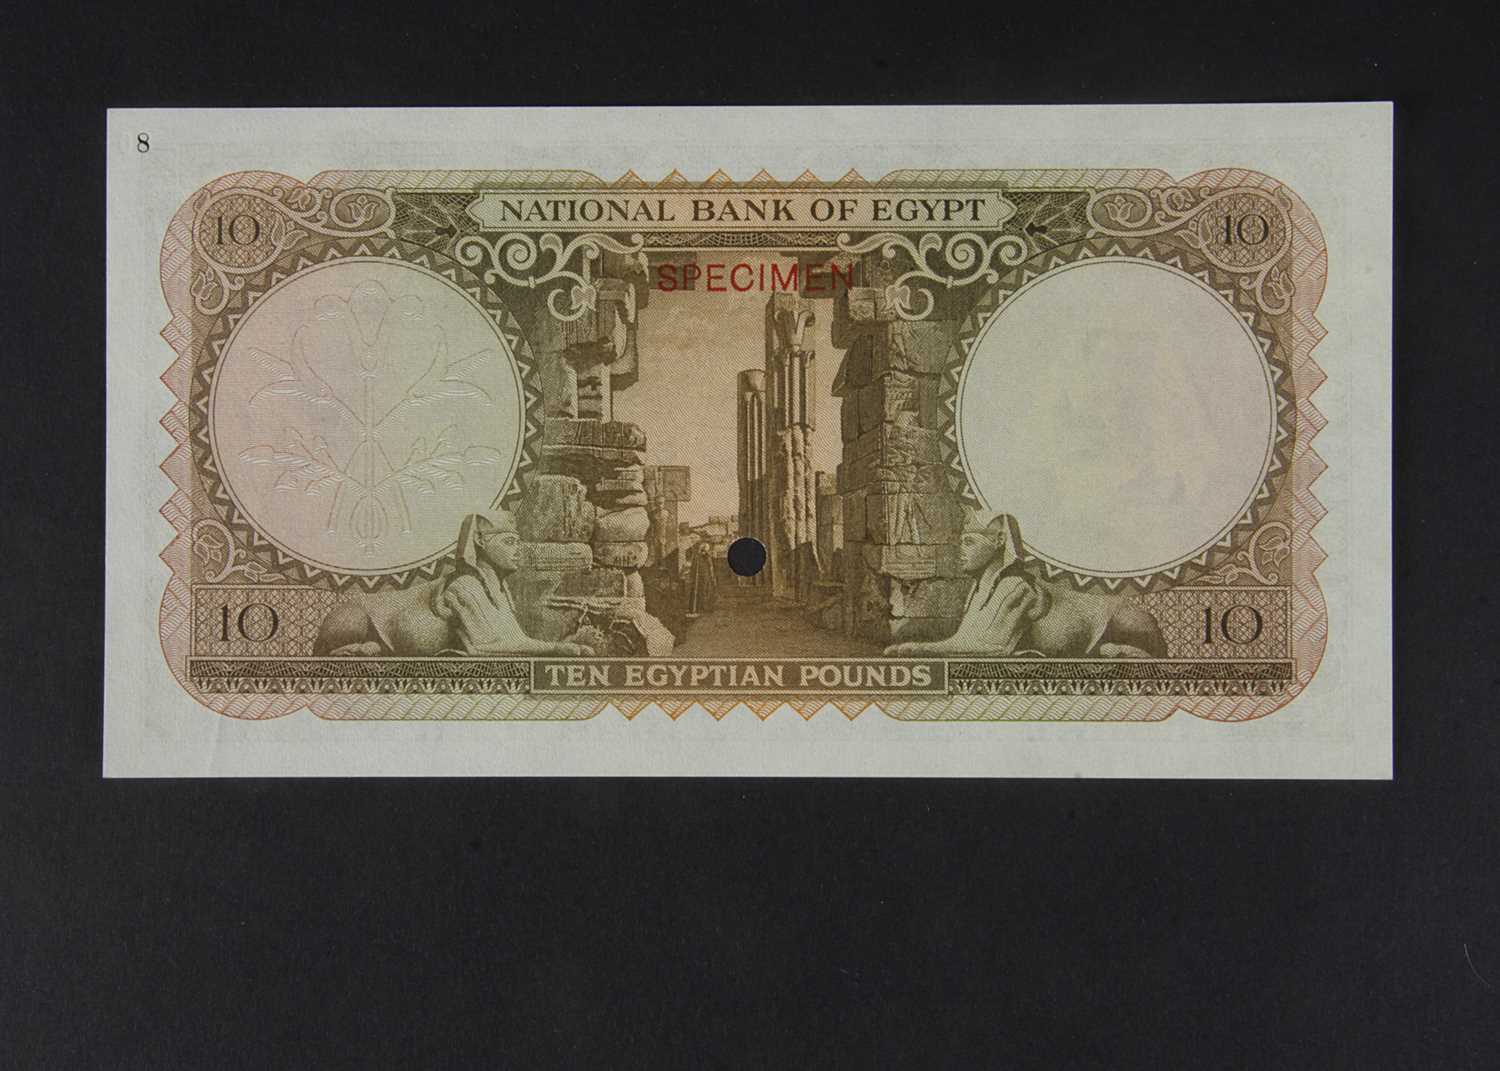 Specimen Bank Note: National Bank of Egypt specimen 10 Egyptian Pounds, - Image 2 of 2